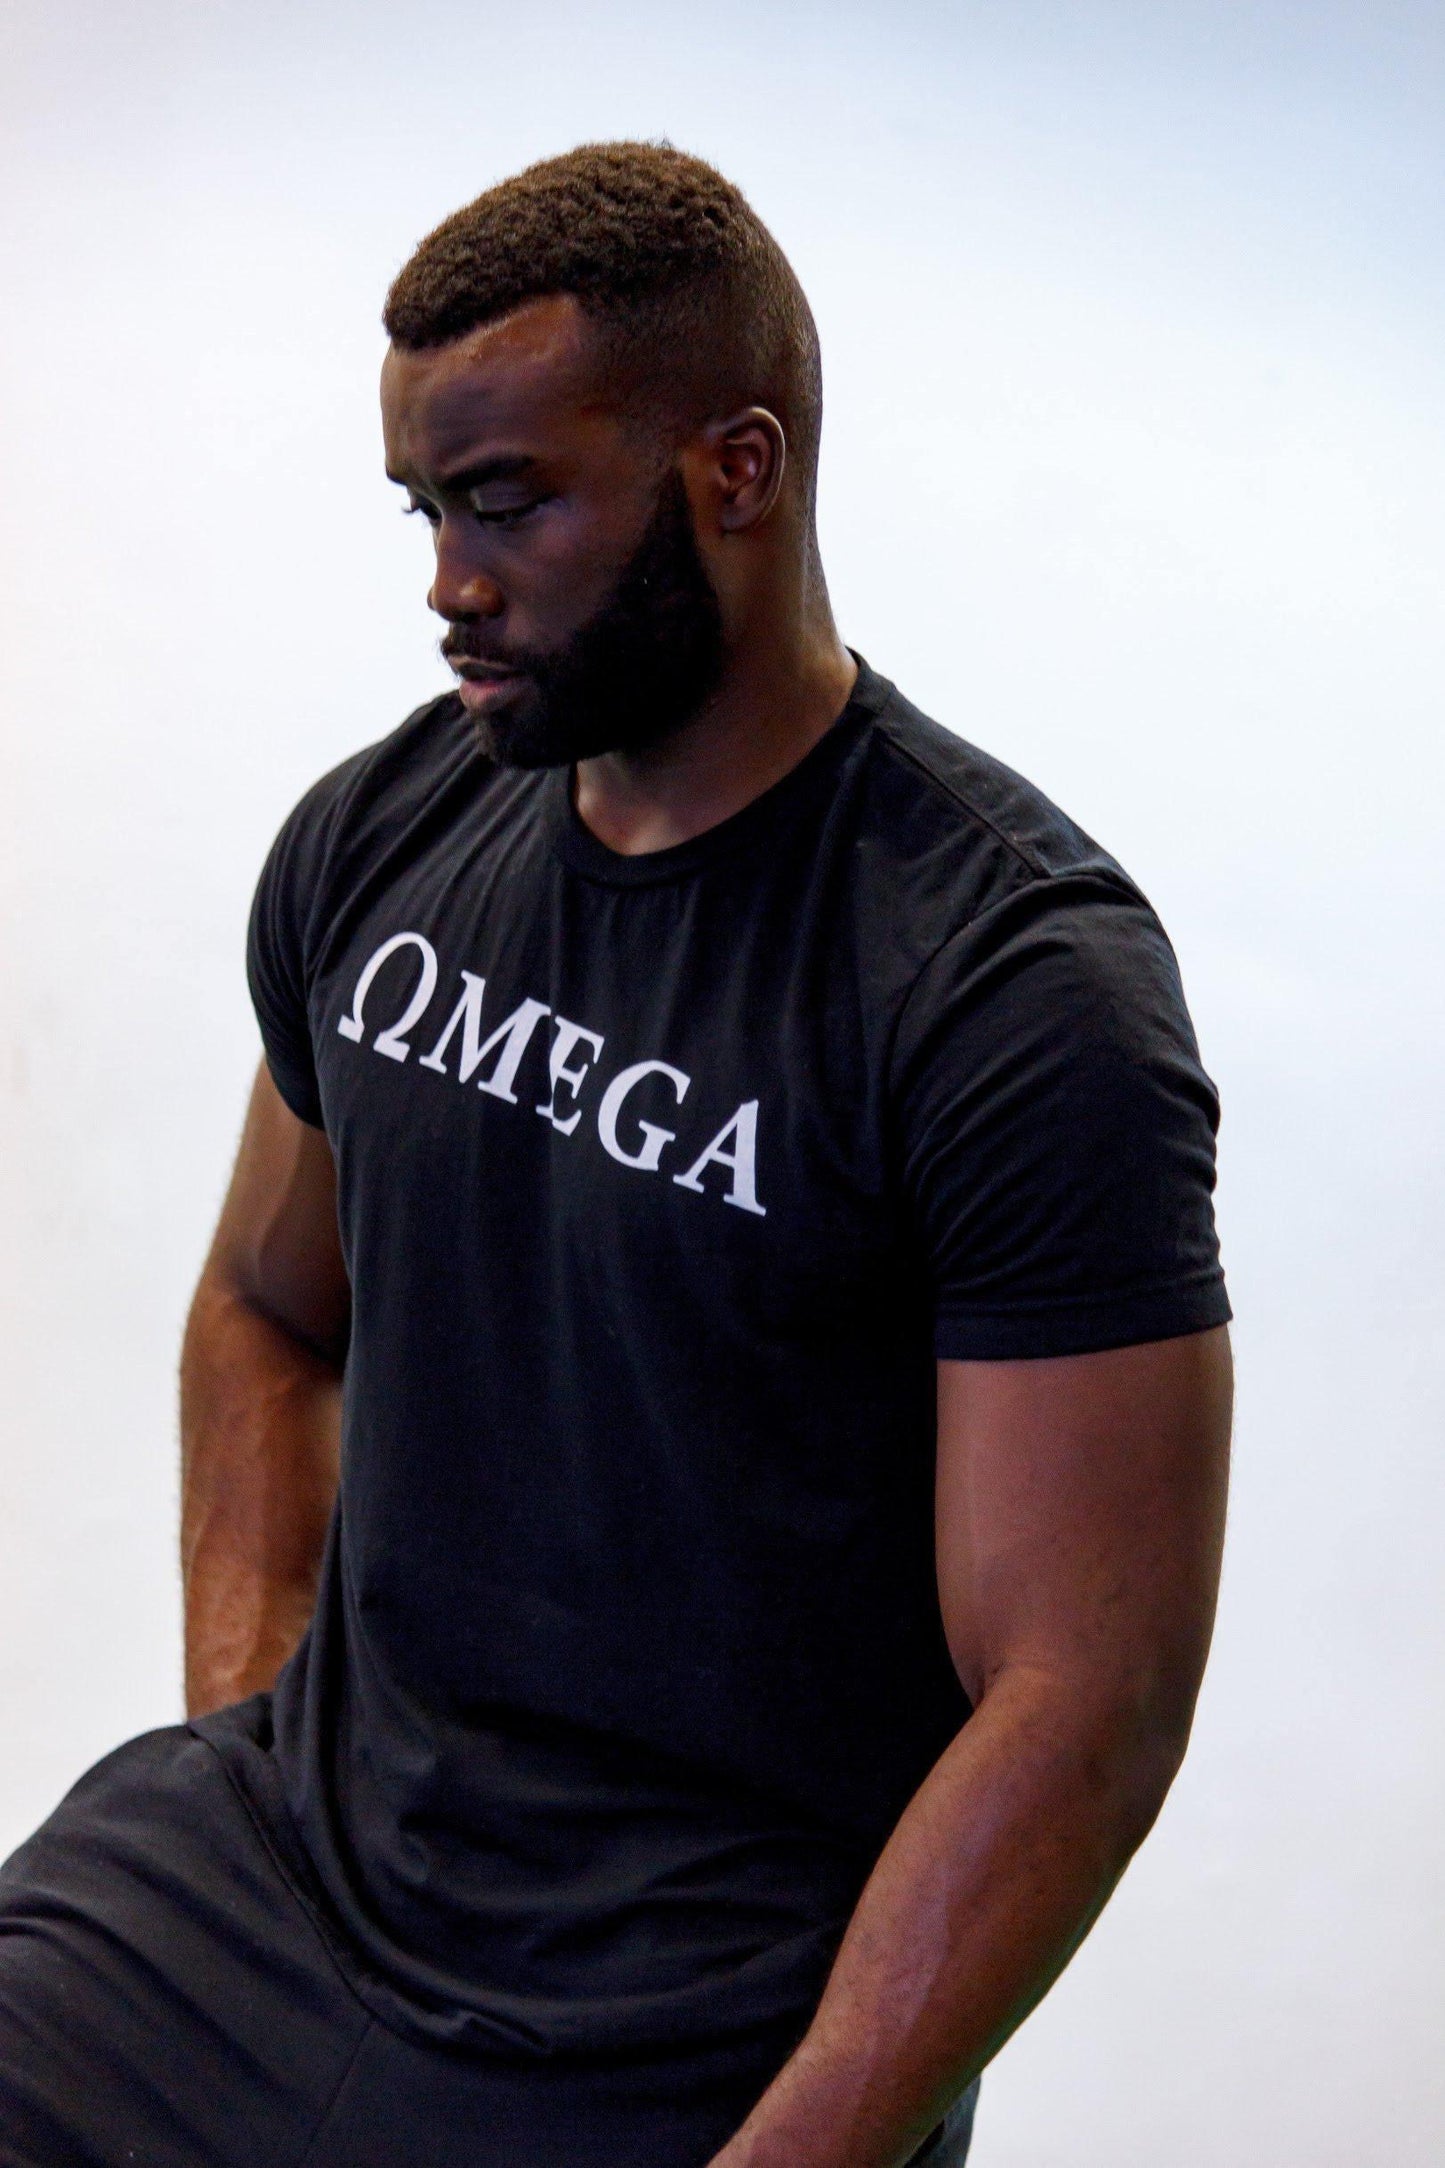 Omega Short sleeve - The Omega Fitness Workout Apparel